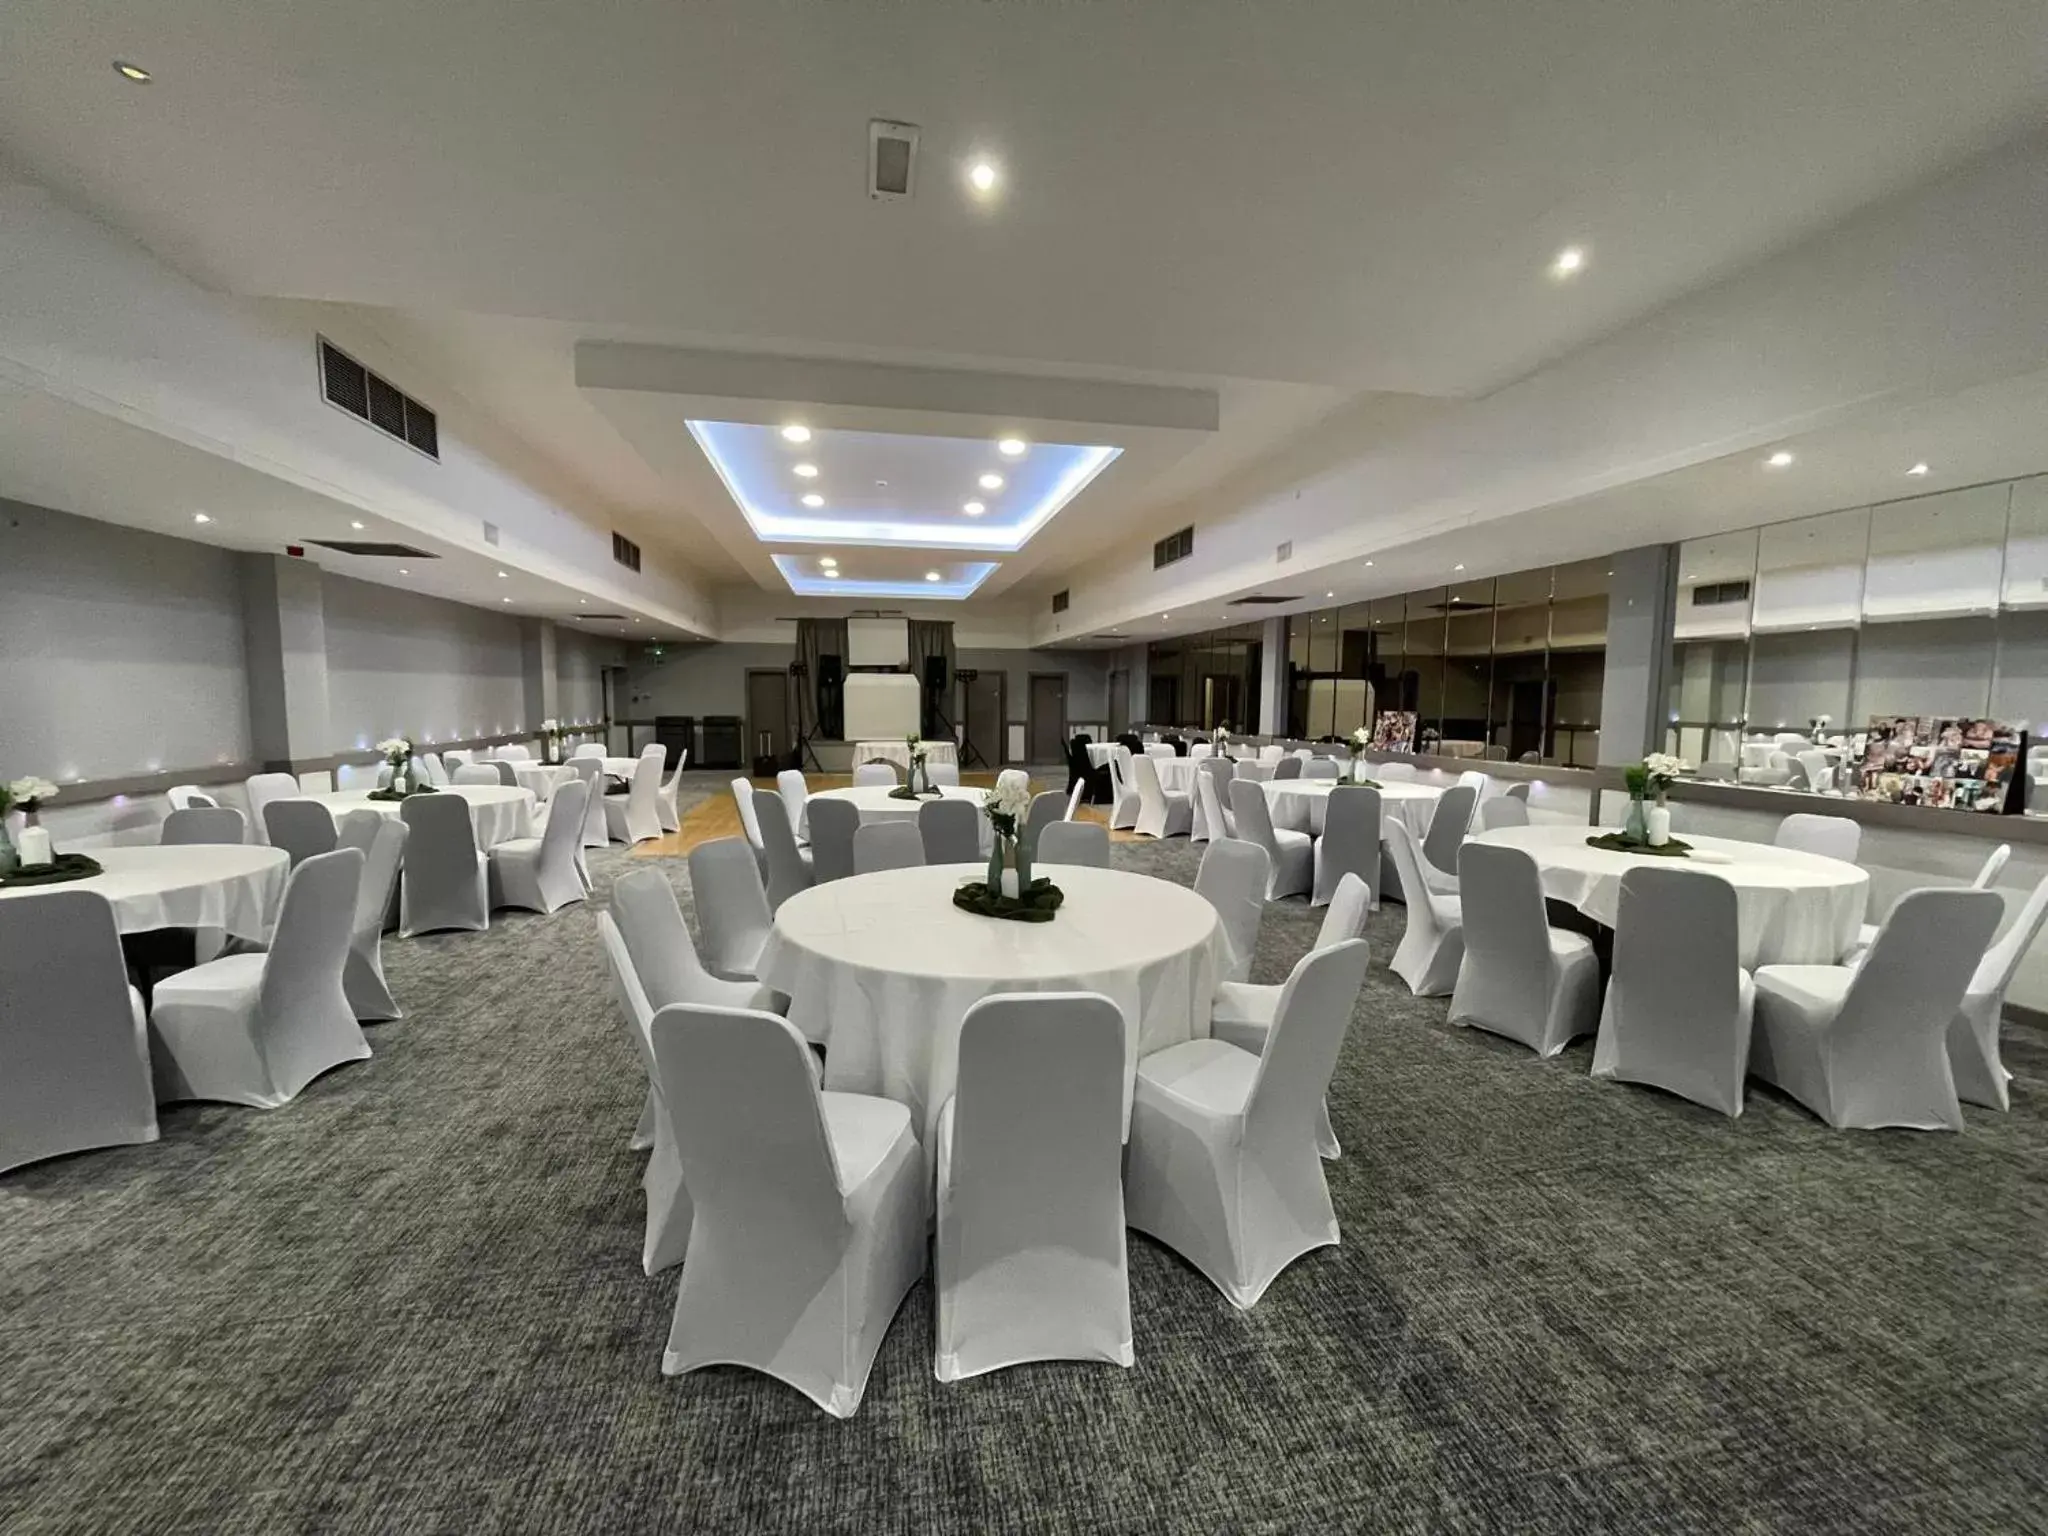 Banquet/Function facilities, Banquet Facilities in Kings Park Hotel